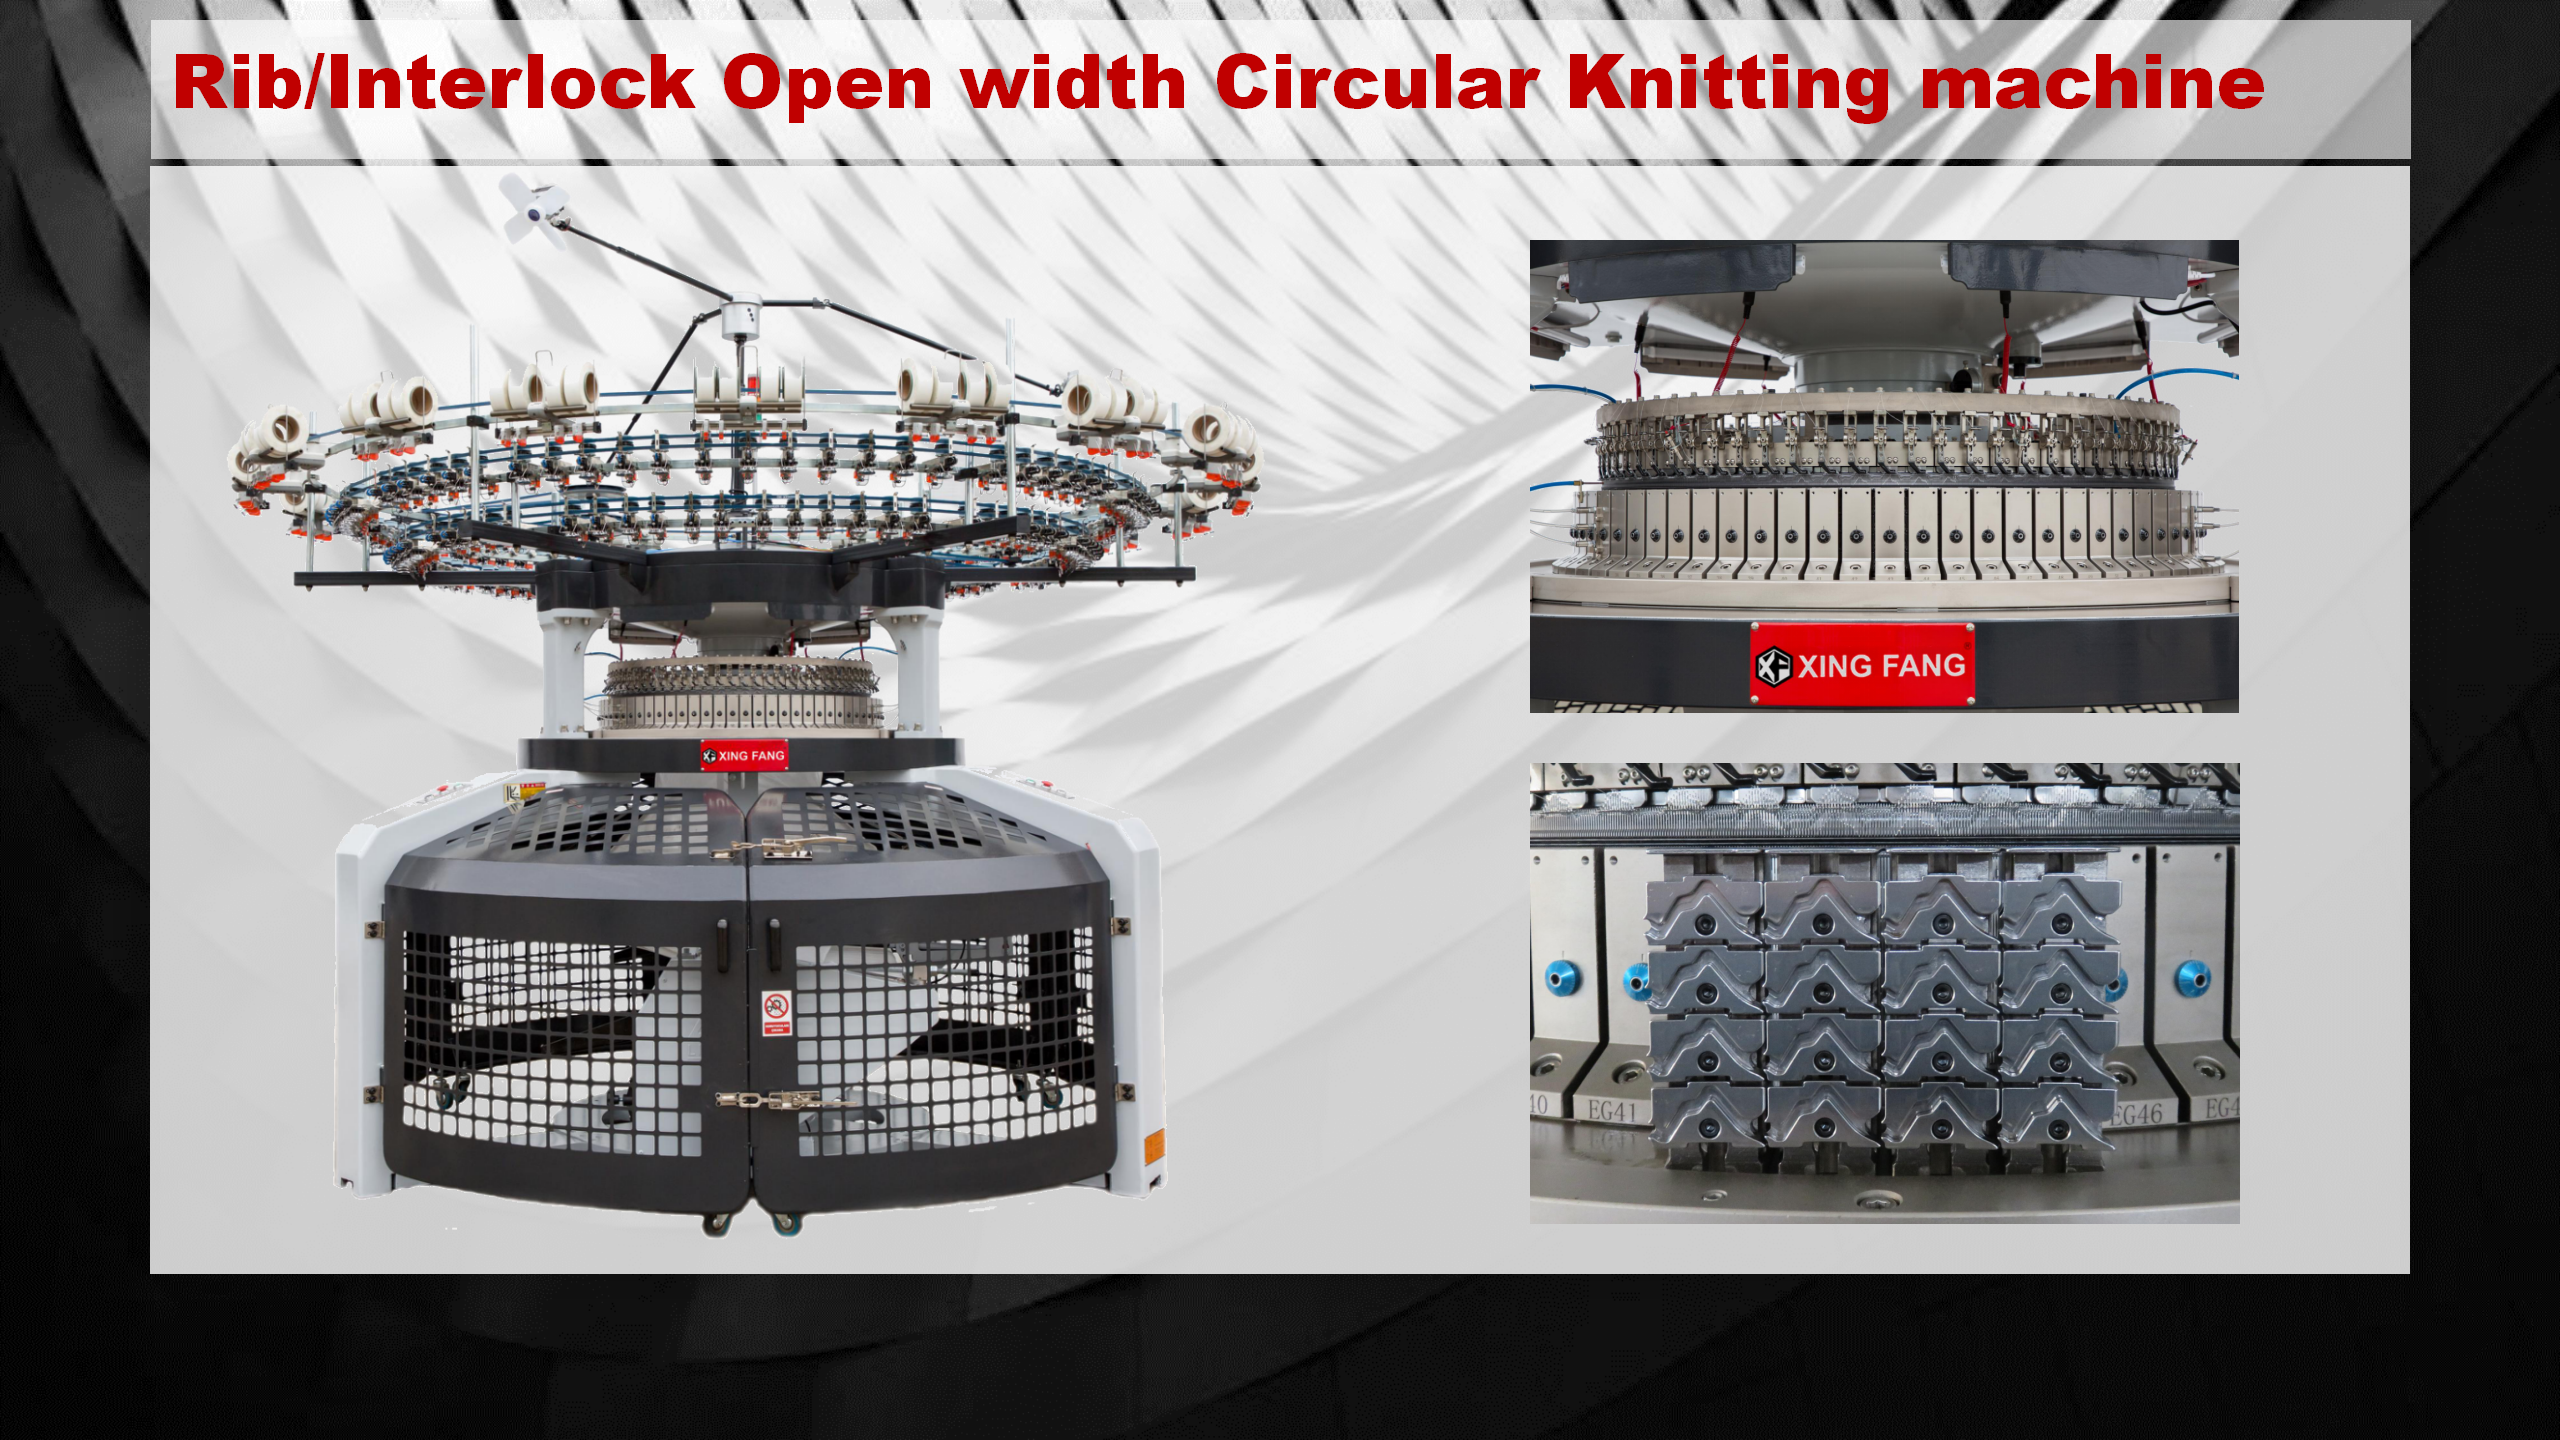 Study on Interlock Circular Knitting Machine - Textile Apex